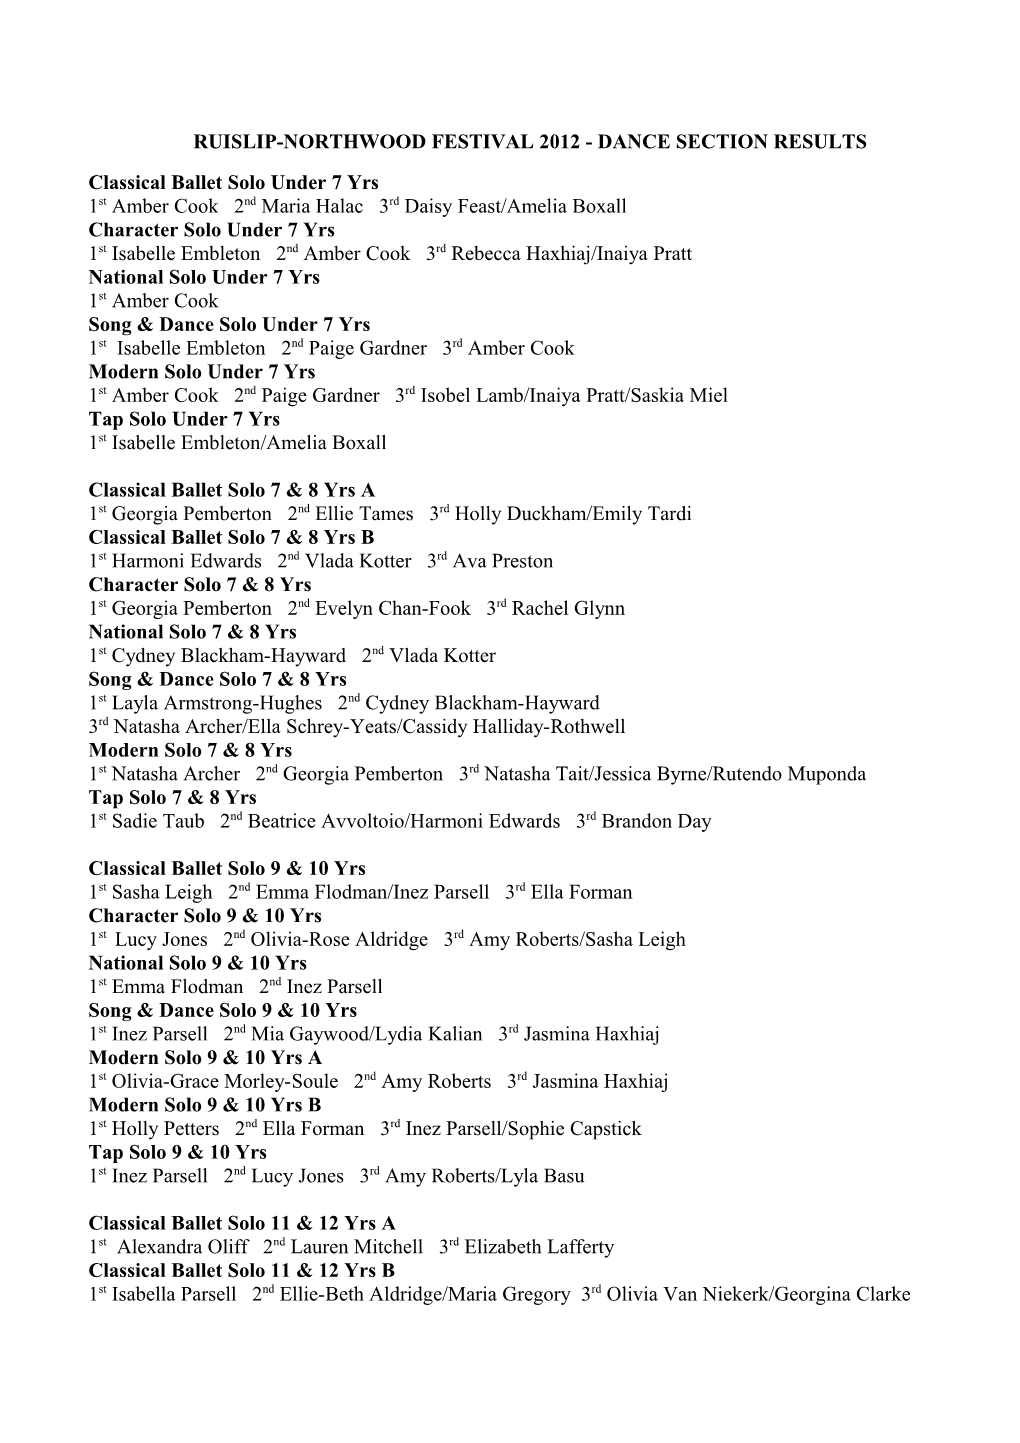 Ruislip-Northwood Festival 2012 - Dance Section Results